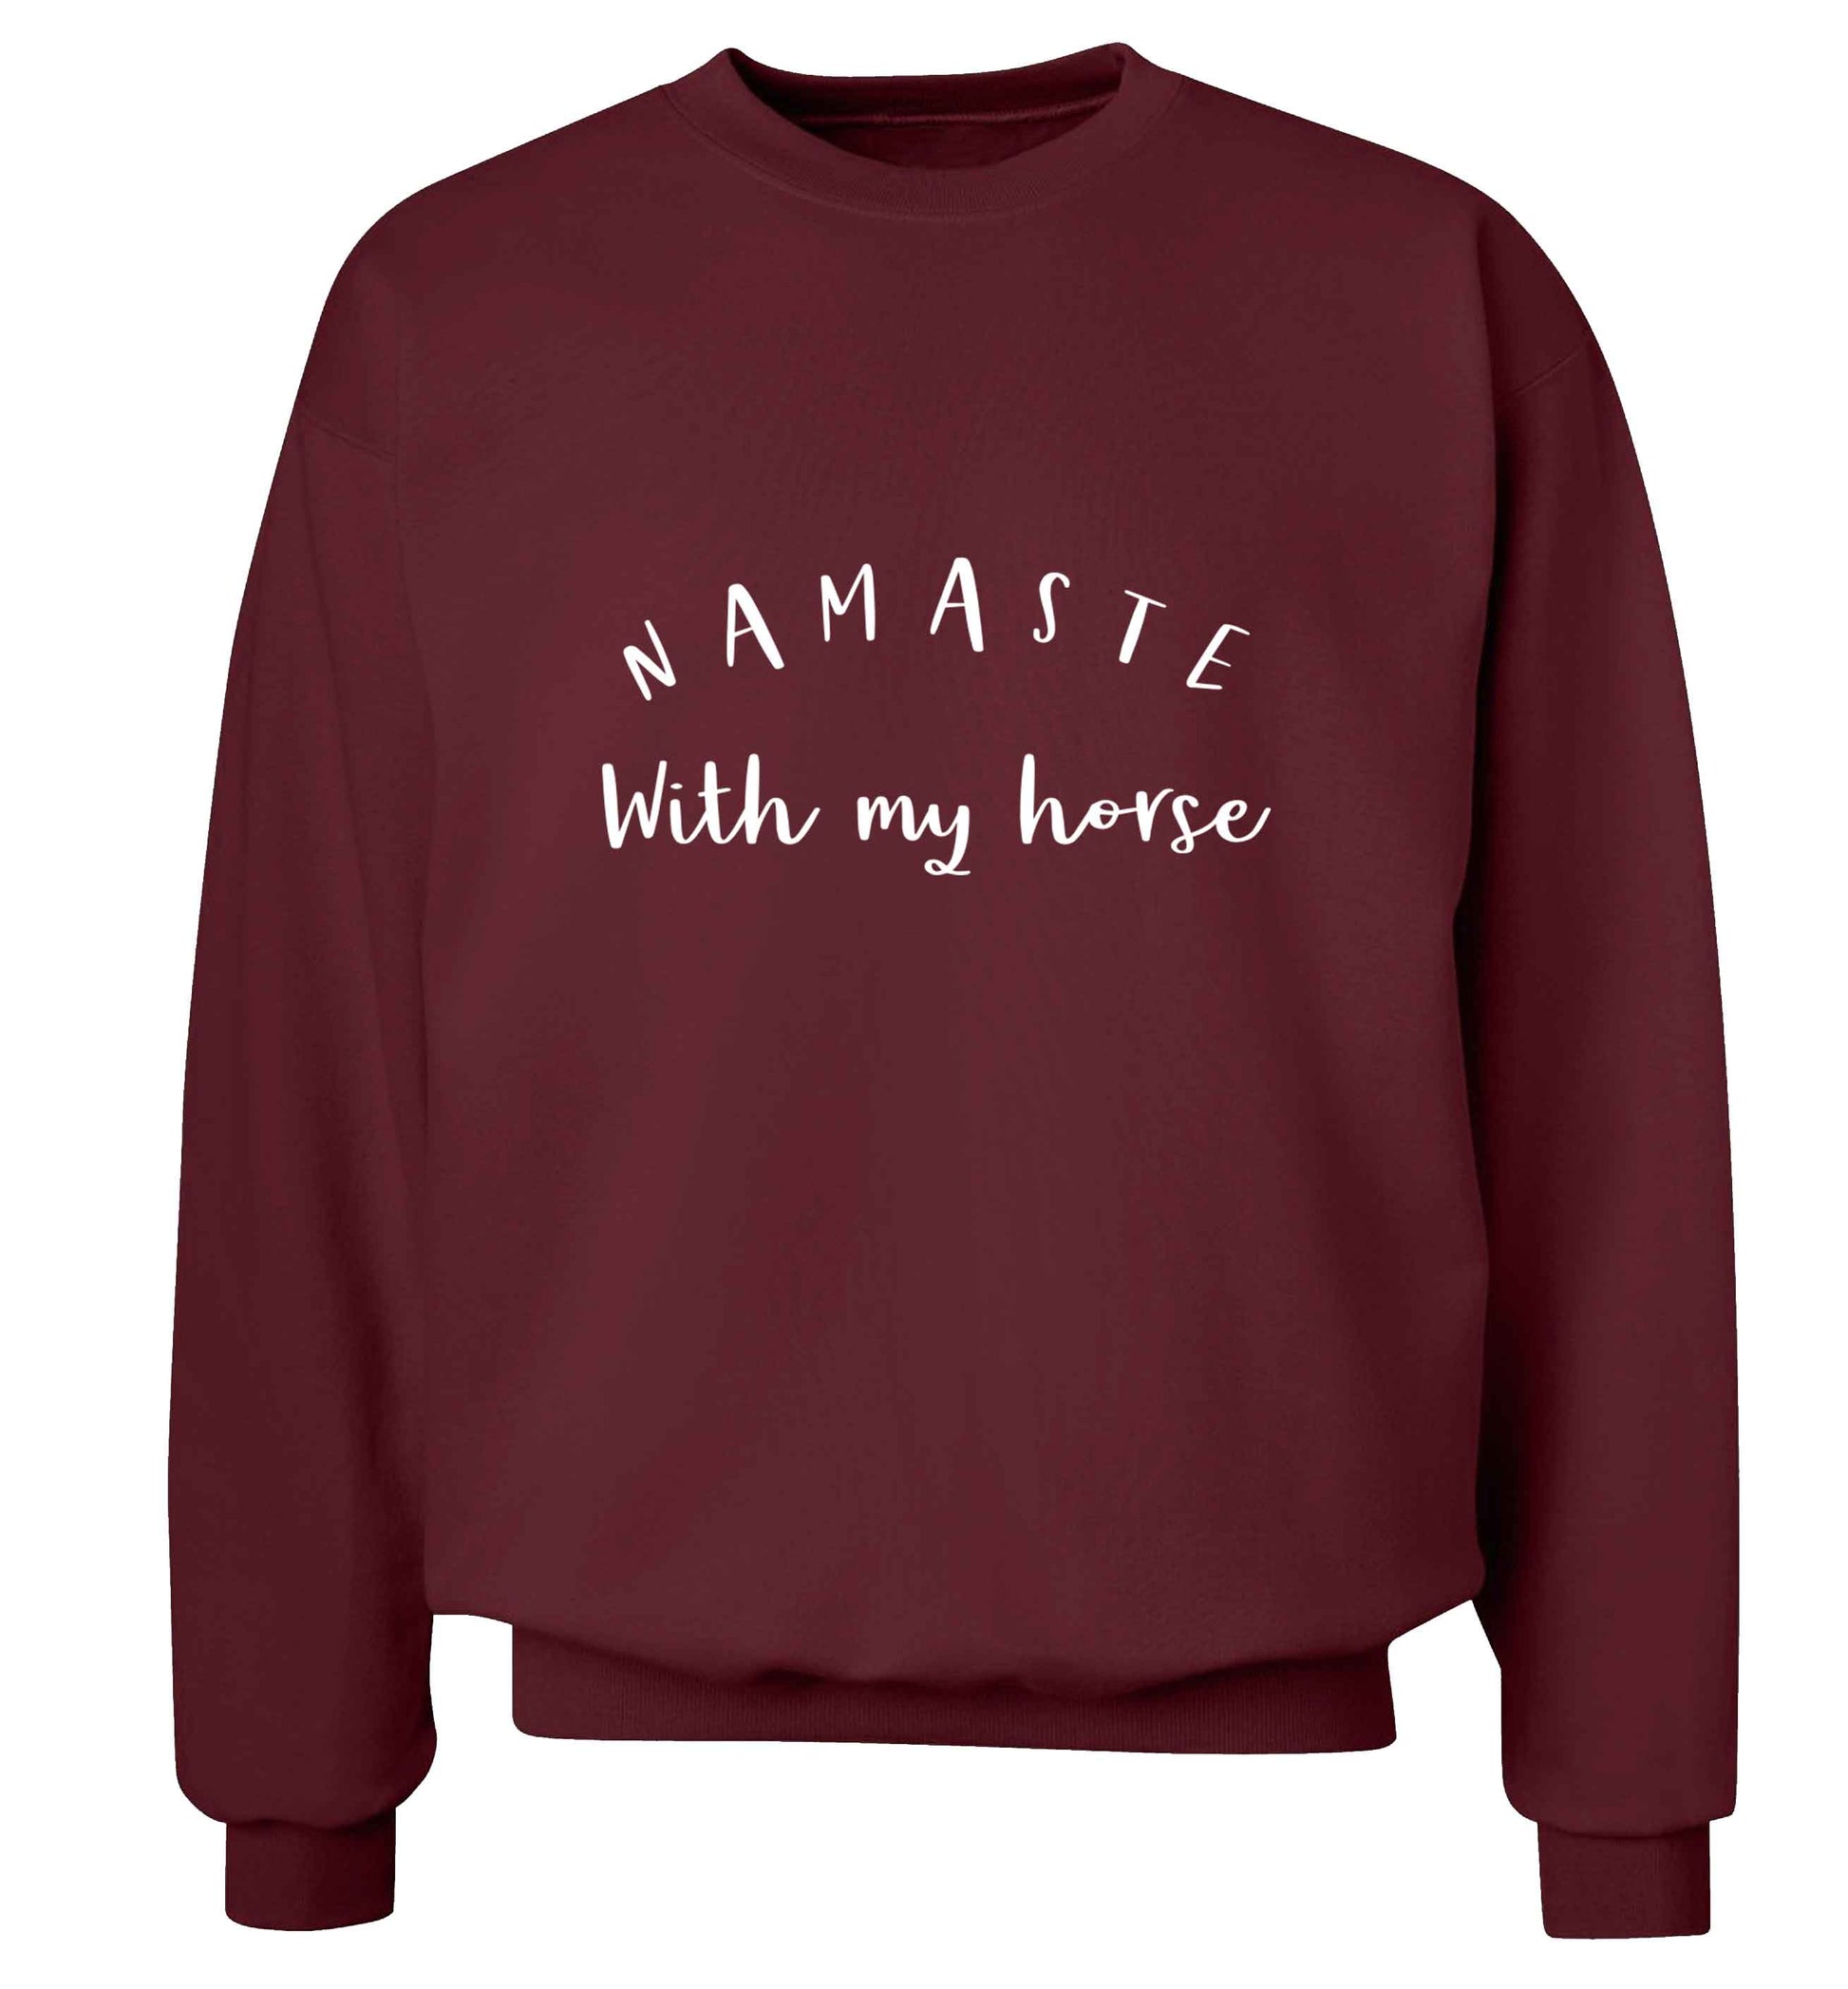 Namaste with my horse adult's unisex maroon sweater 2XL